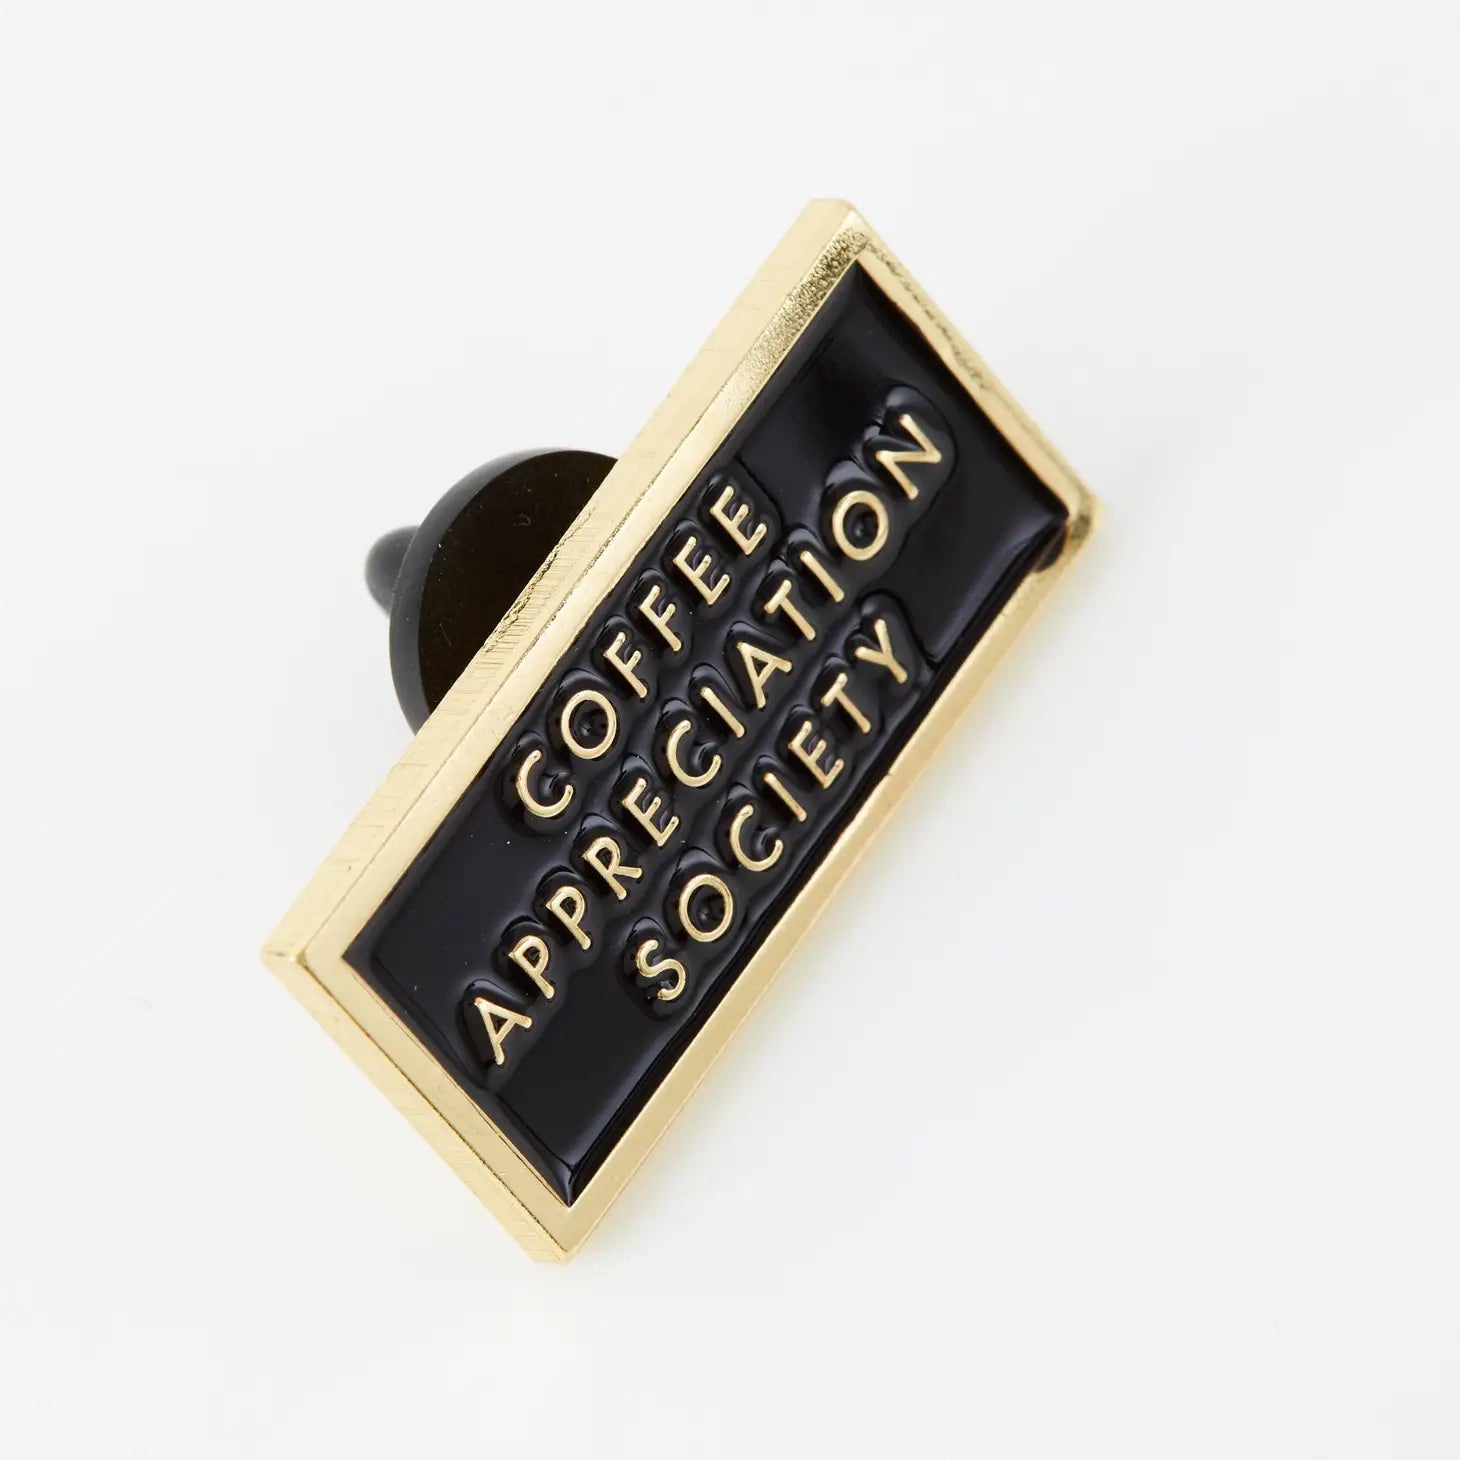 Coffee Appreciation pin